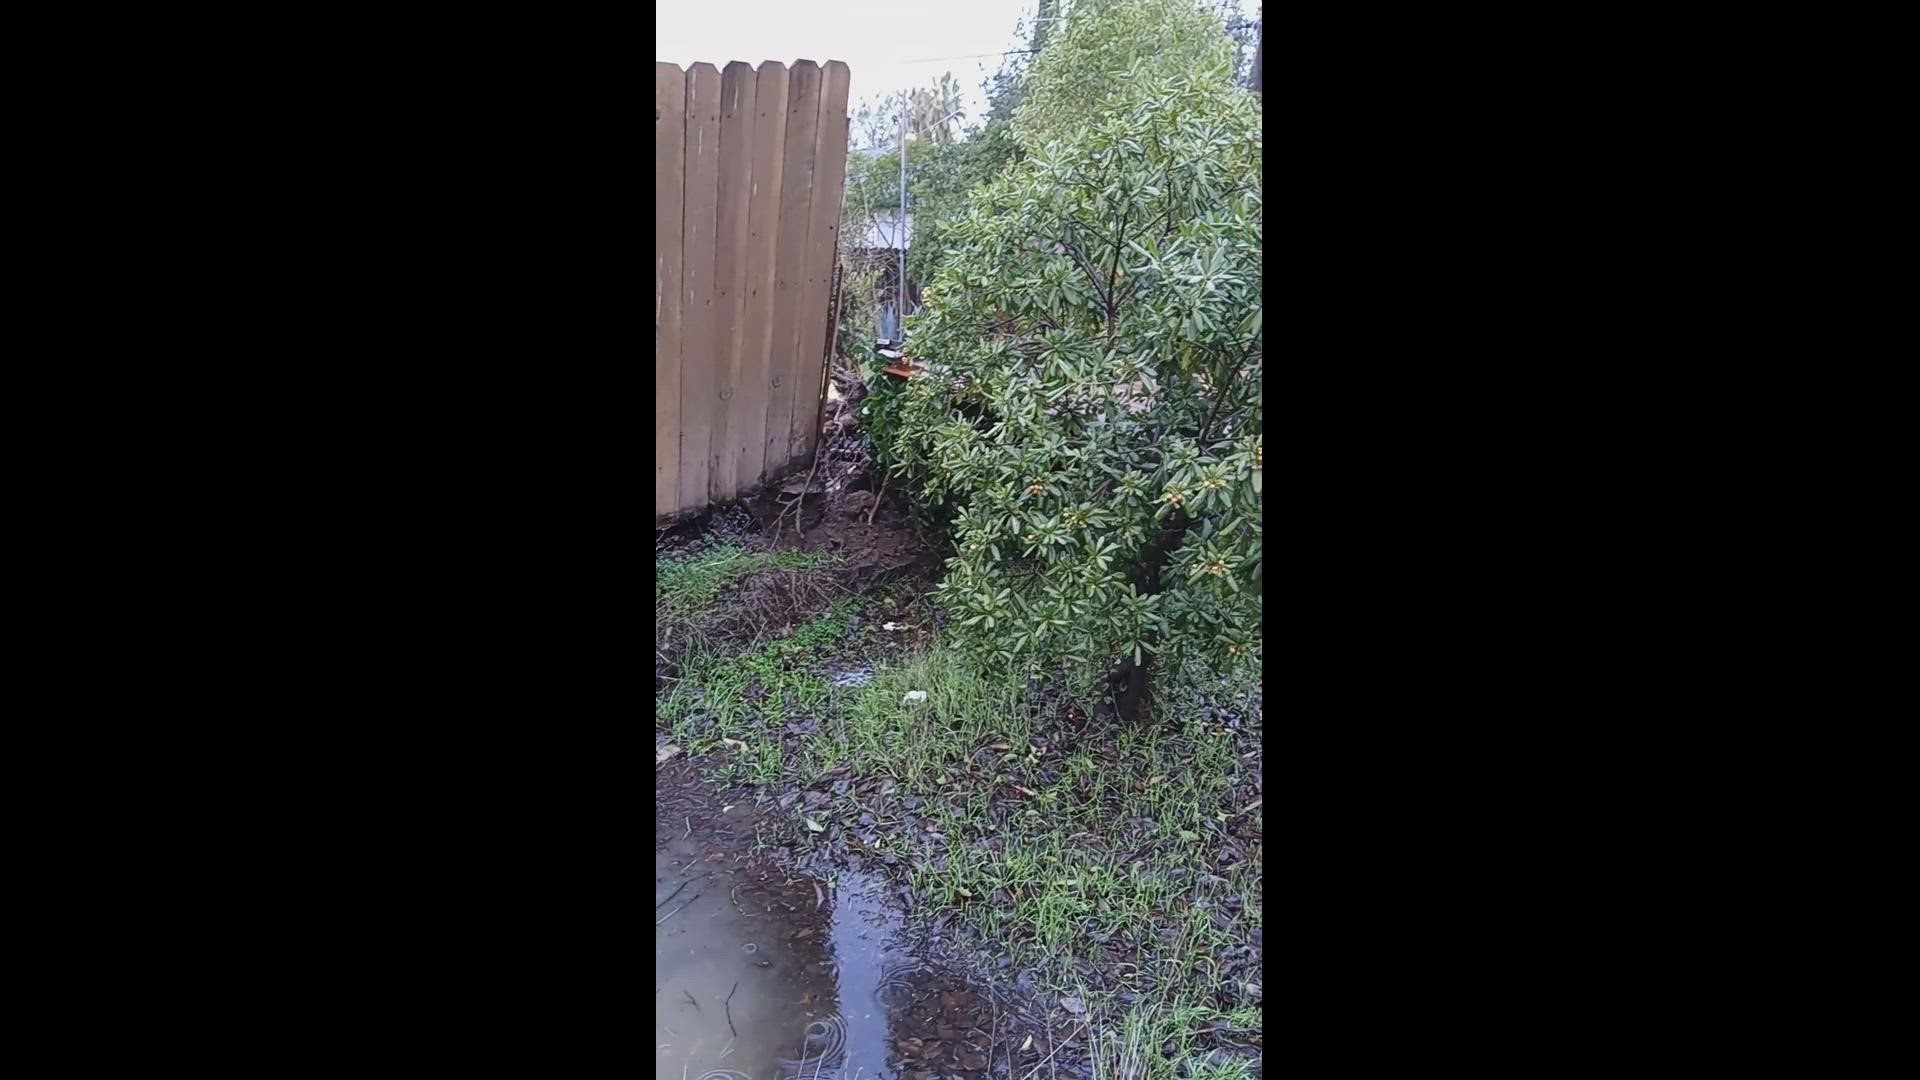 Winter Storm versus tree and fence on Colfax Street., Sacramento
Credit: Deserie Lisondra